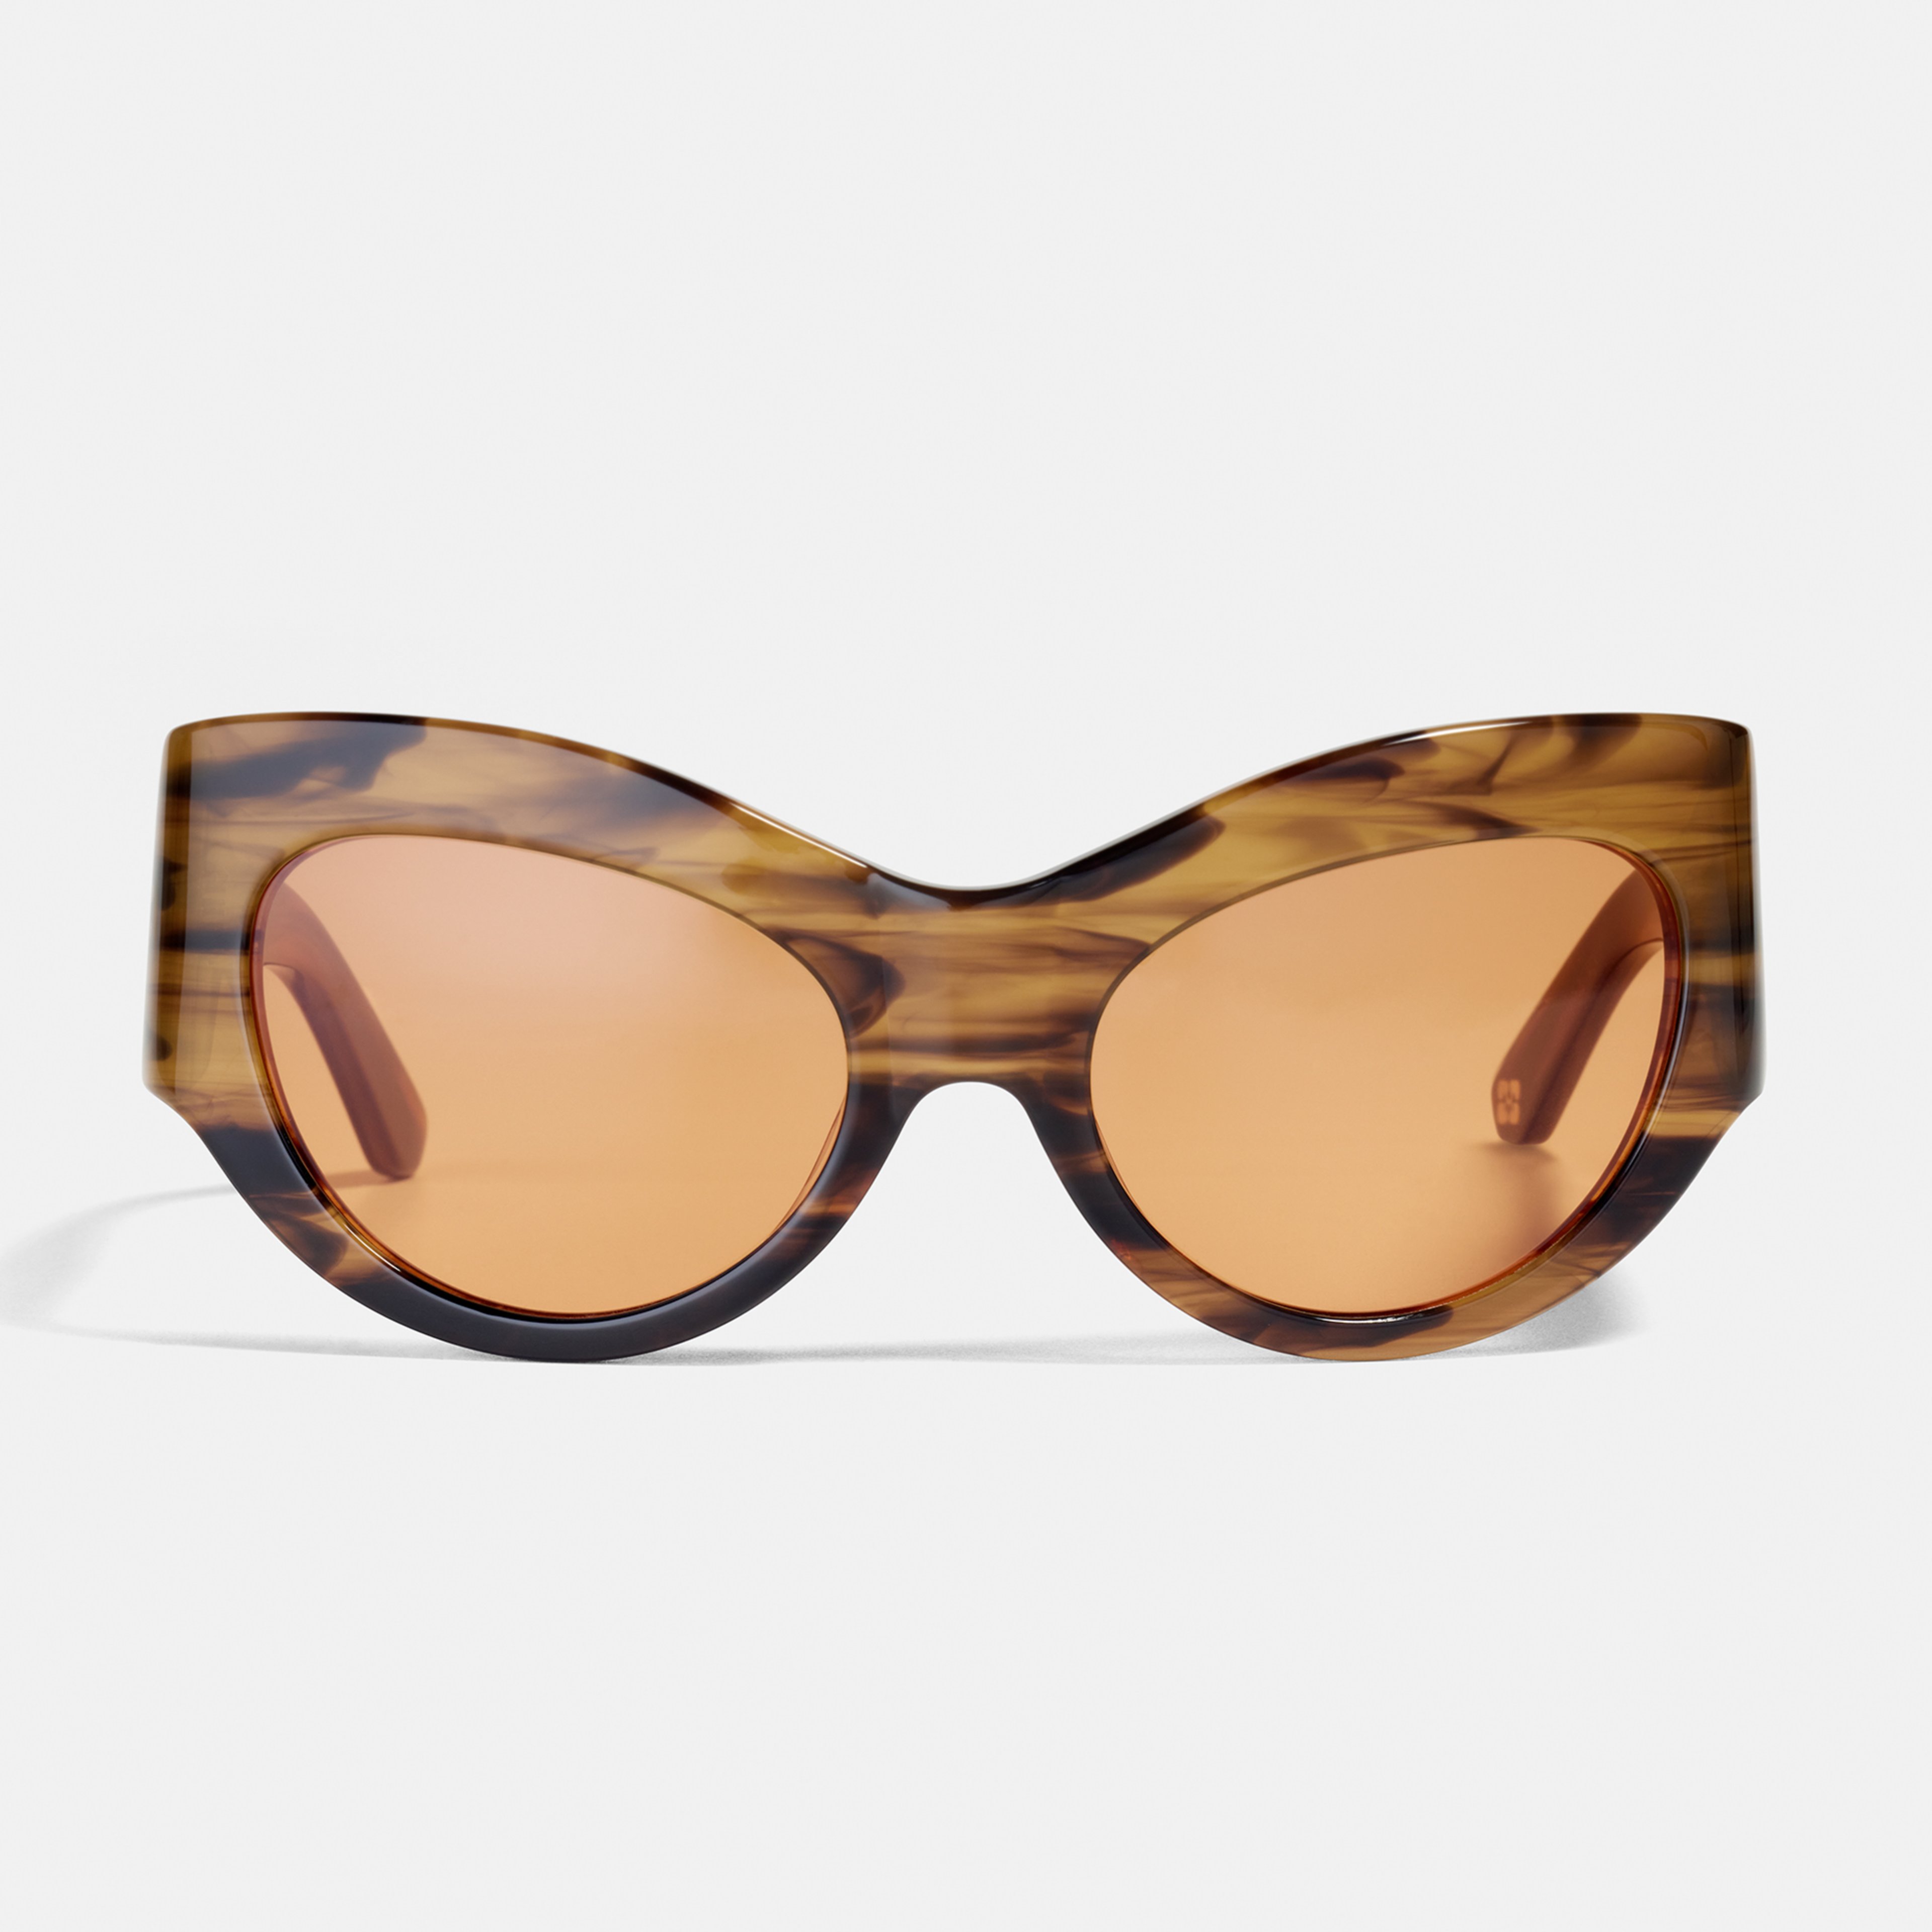 Ace & Tate Sunglasses | oval Renew bio acetate in Brown, tortoise